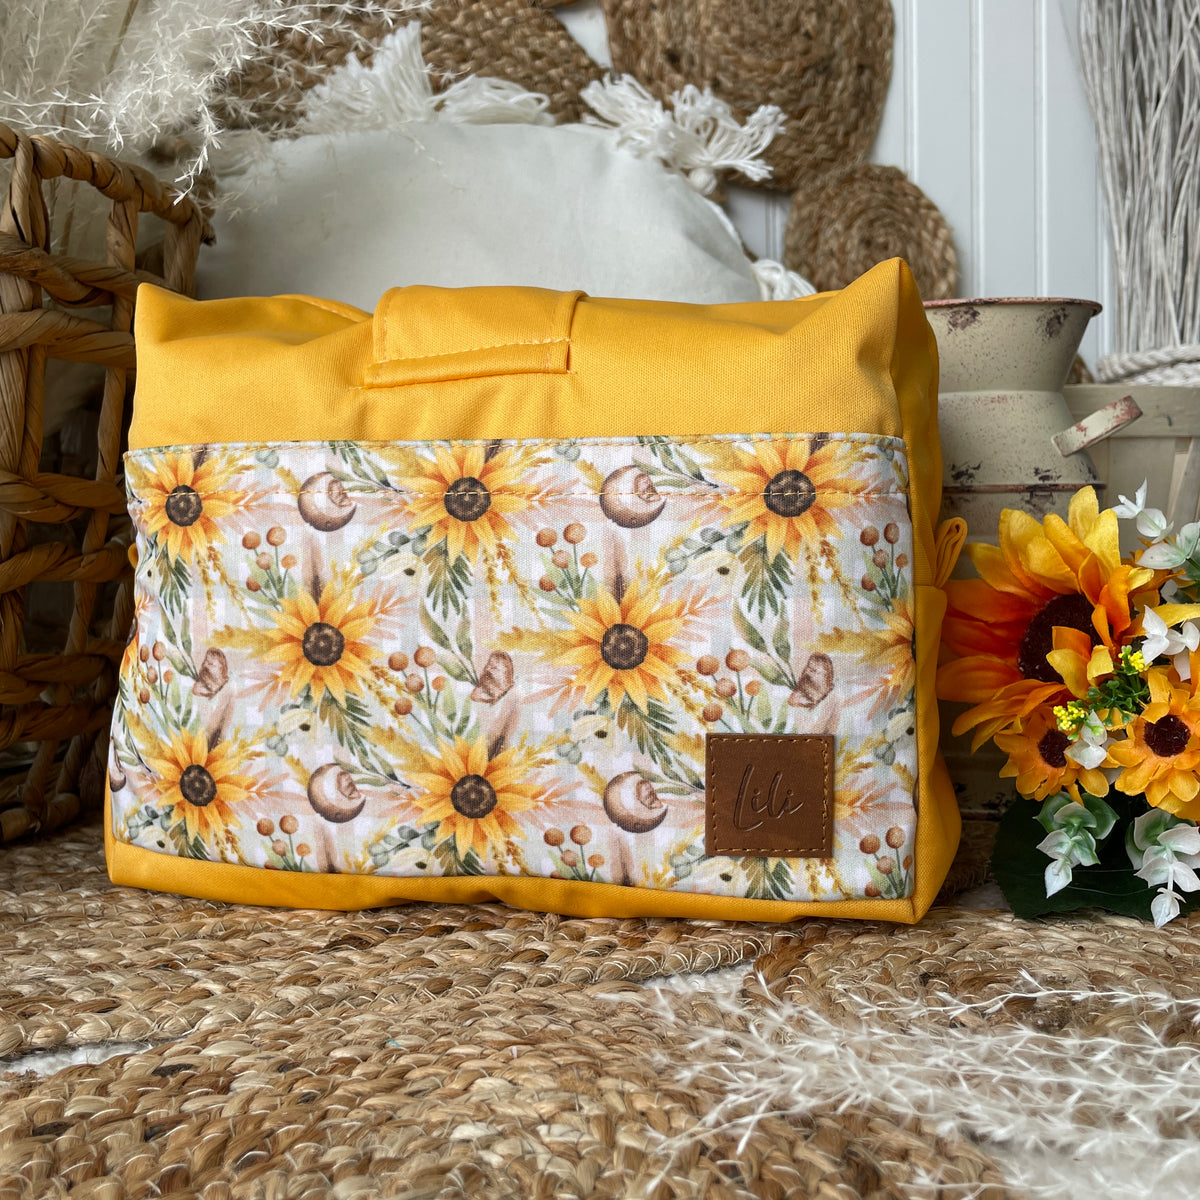 Waterproof LiliPOD bag | Country sunflower